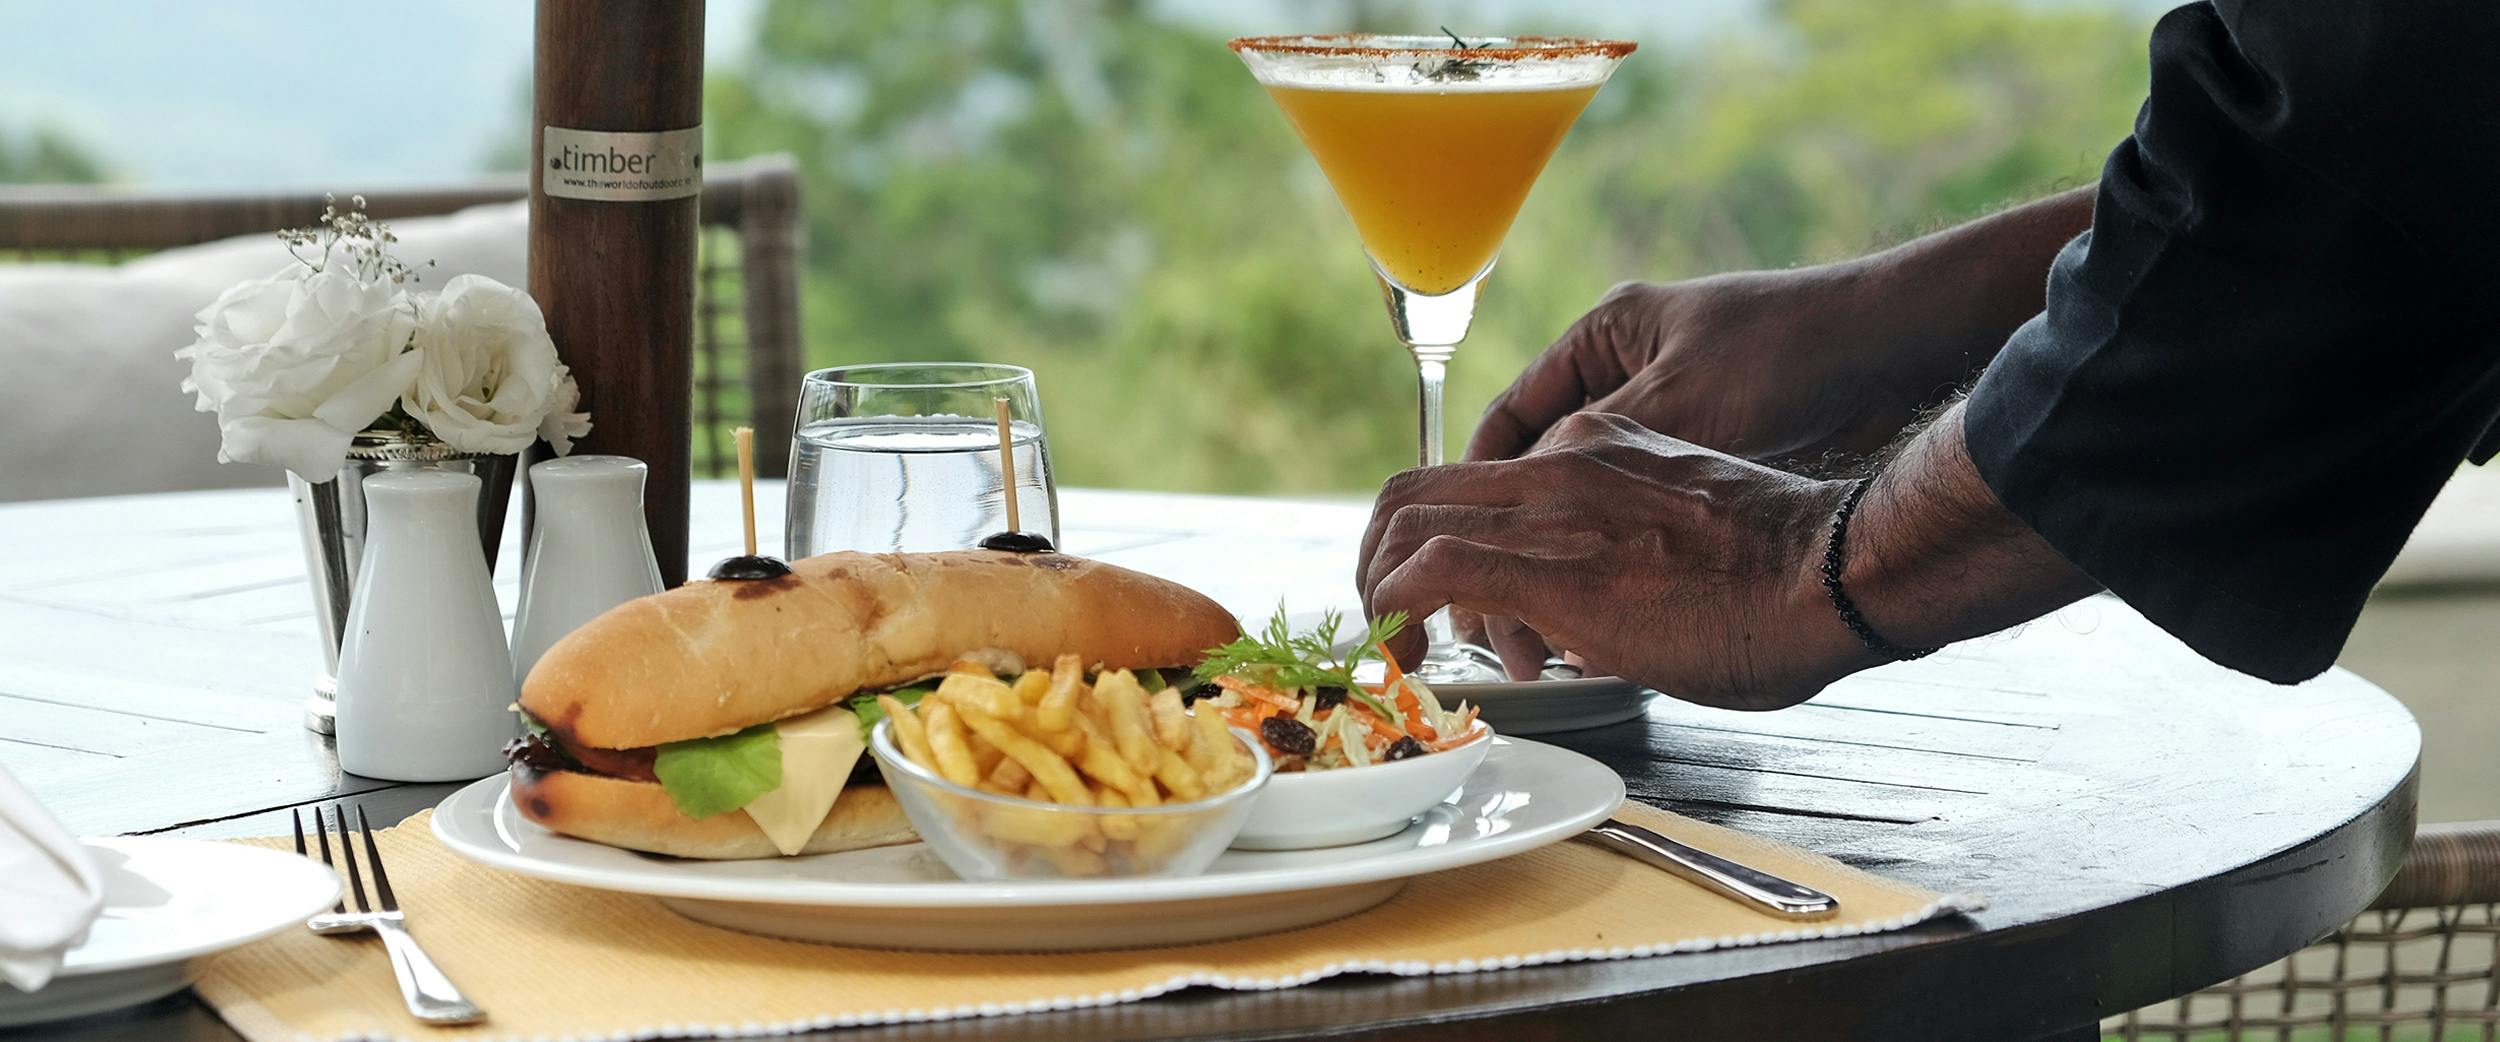 The W15 Steak Sandwich - Dining Experiences at Hanthana, Kandy